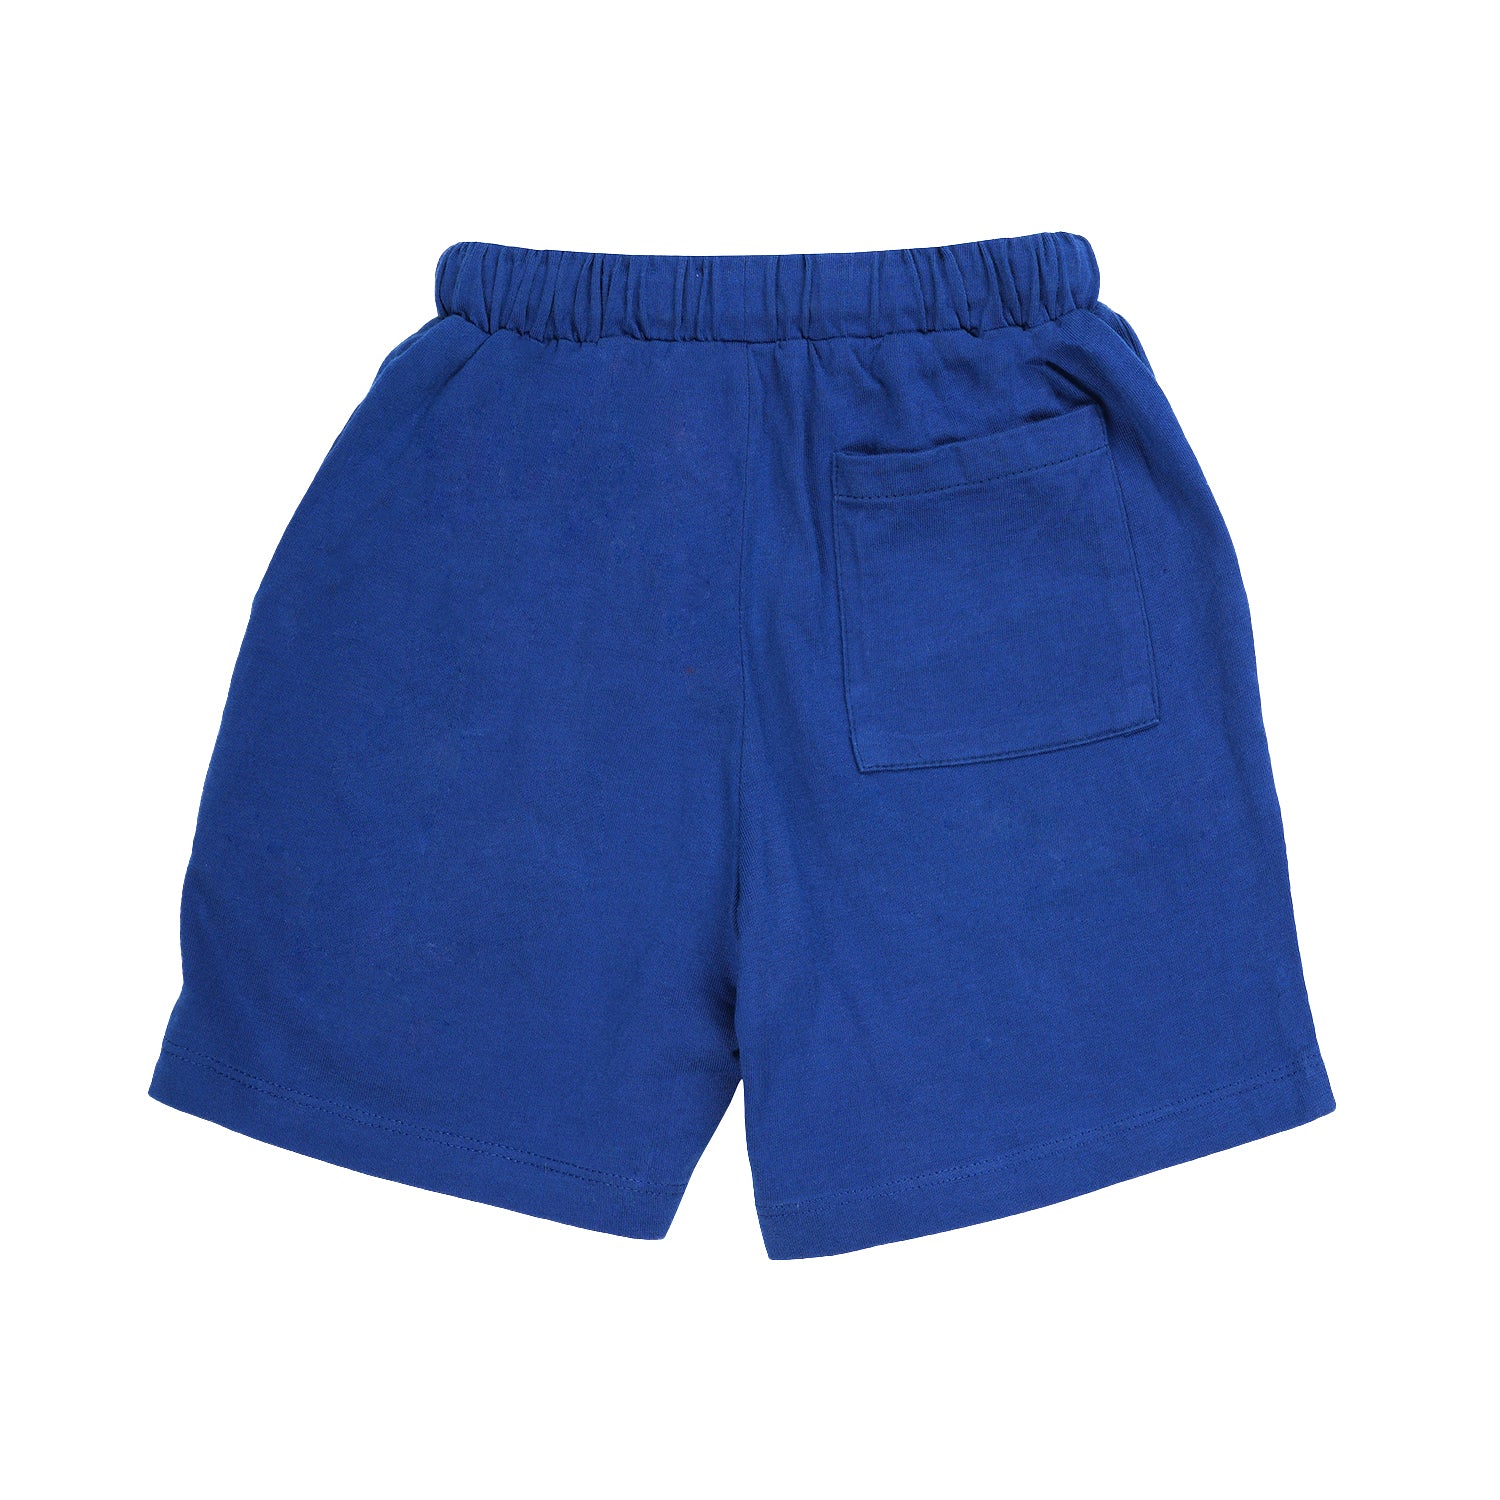 Co-real Blue Unisex Shorts